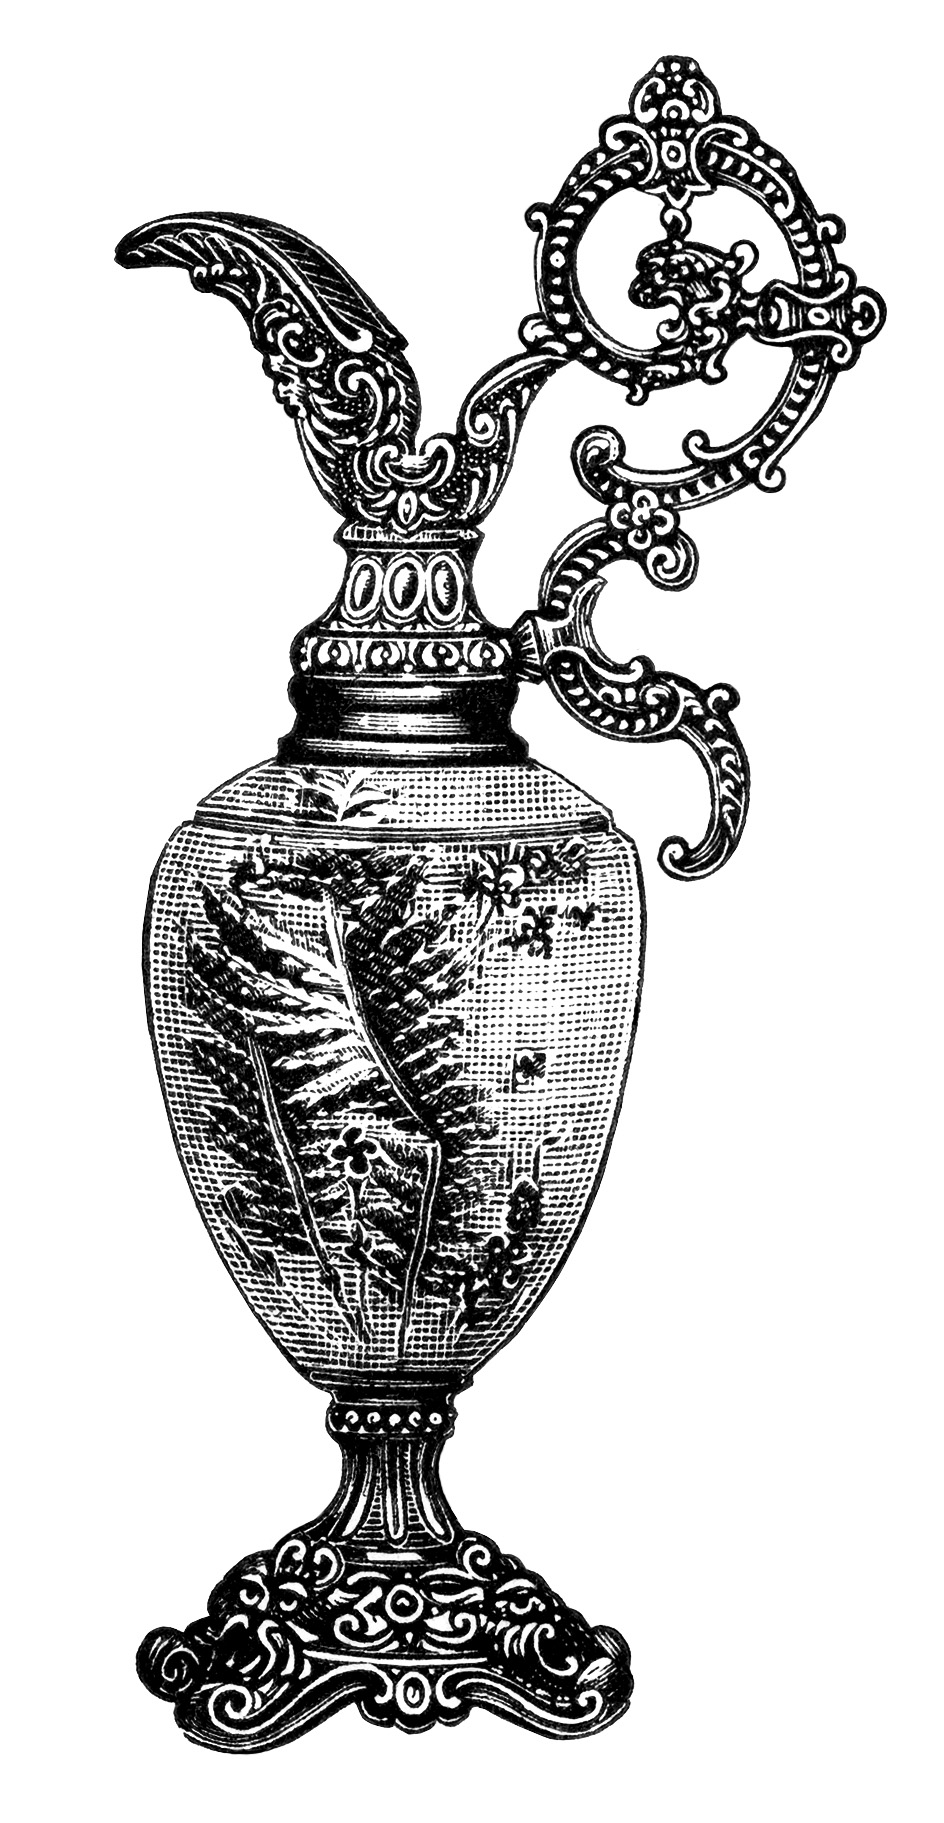 black and white clip art, elegant vintage vase clipart, old fashioned mantel ornament, antique pitcher illustration, swirly jug image